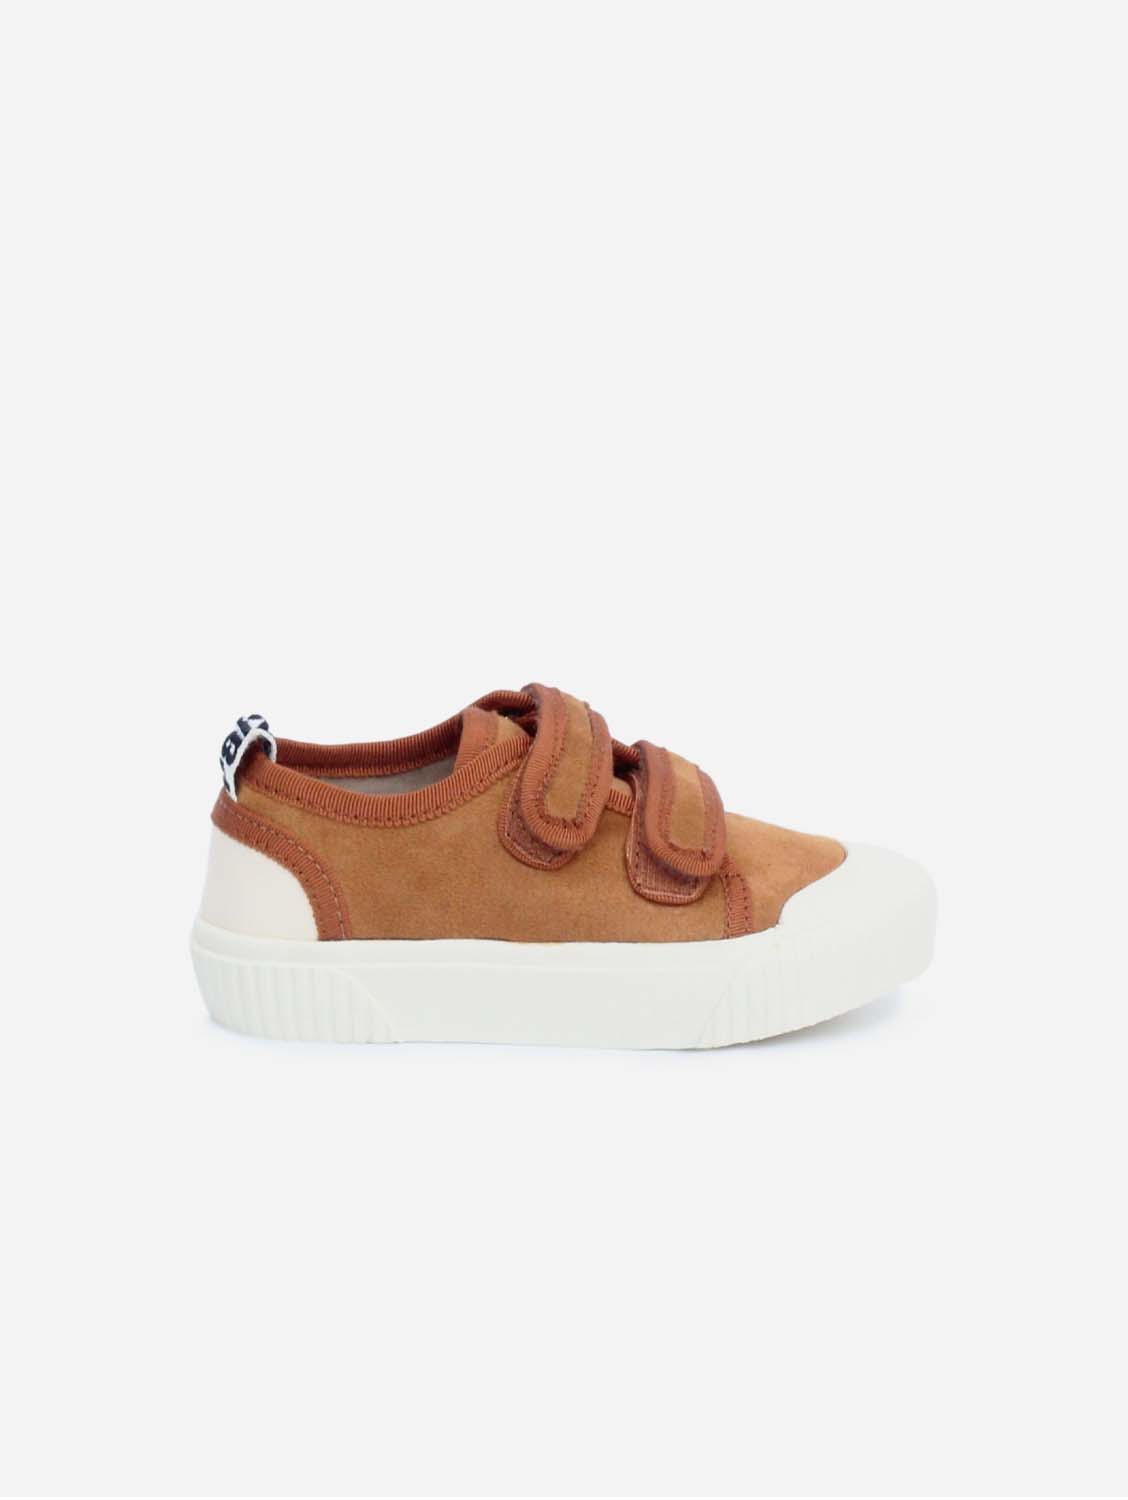 PAIZO SELENE, Orange Velcro Sneakers 23 (13.5cm)